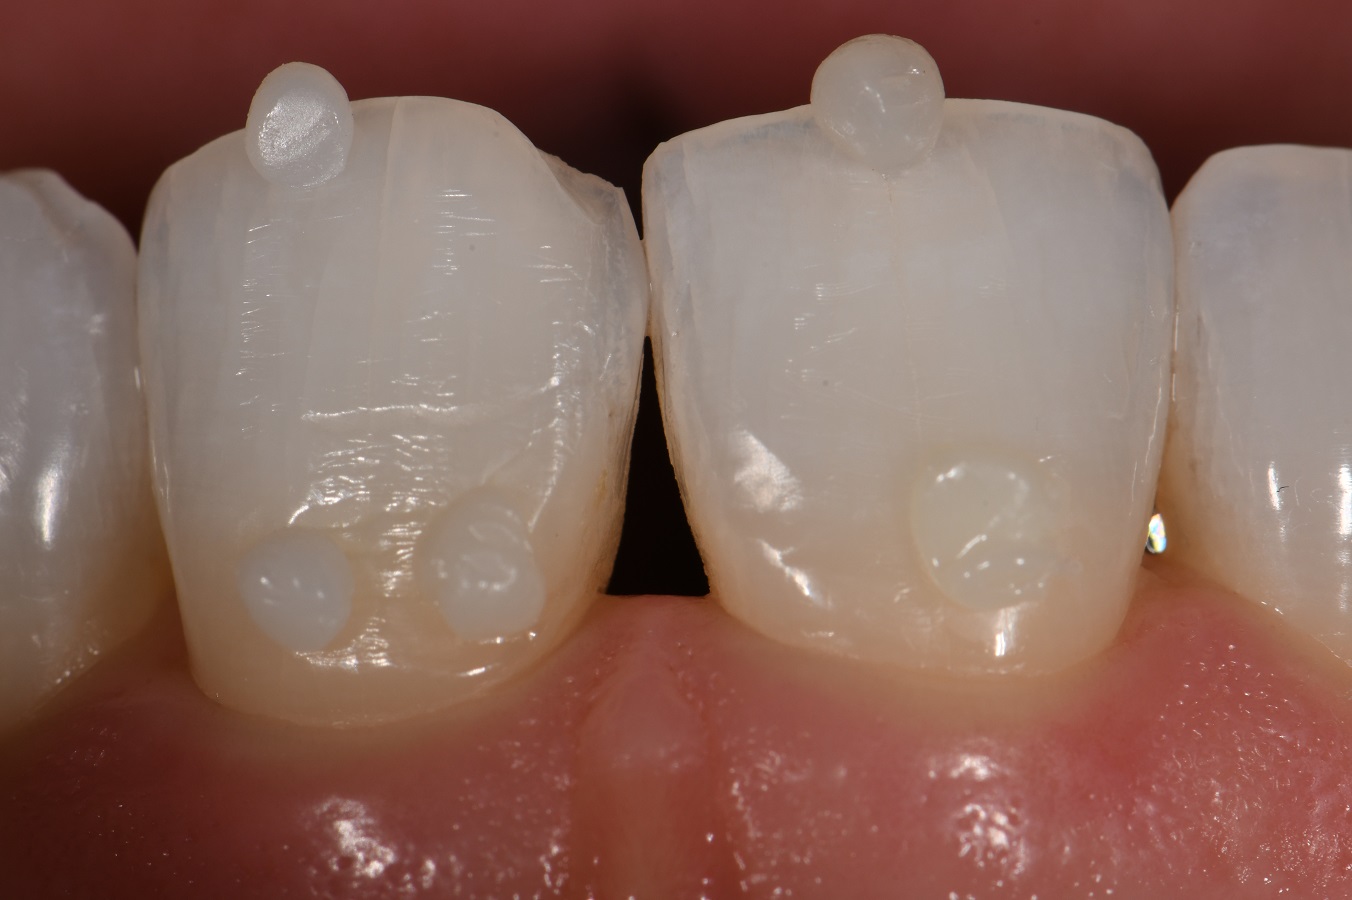 Post Orthodontic Composite Bonding Post Orthodontic Composite Bonding